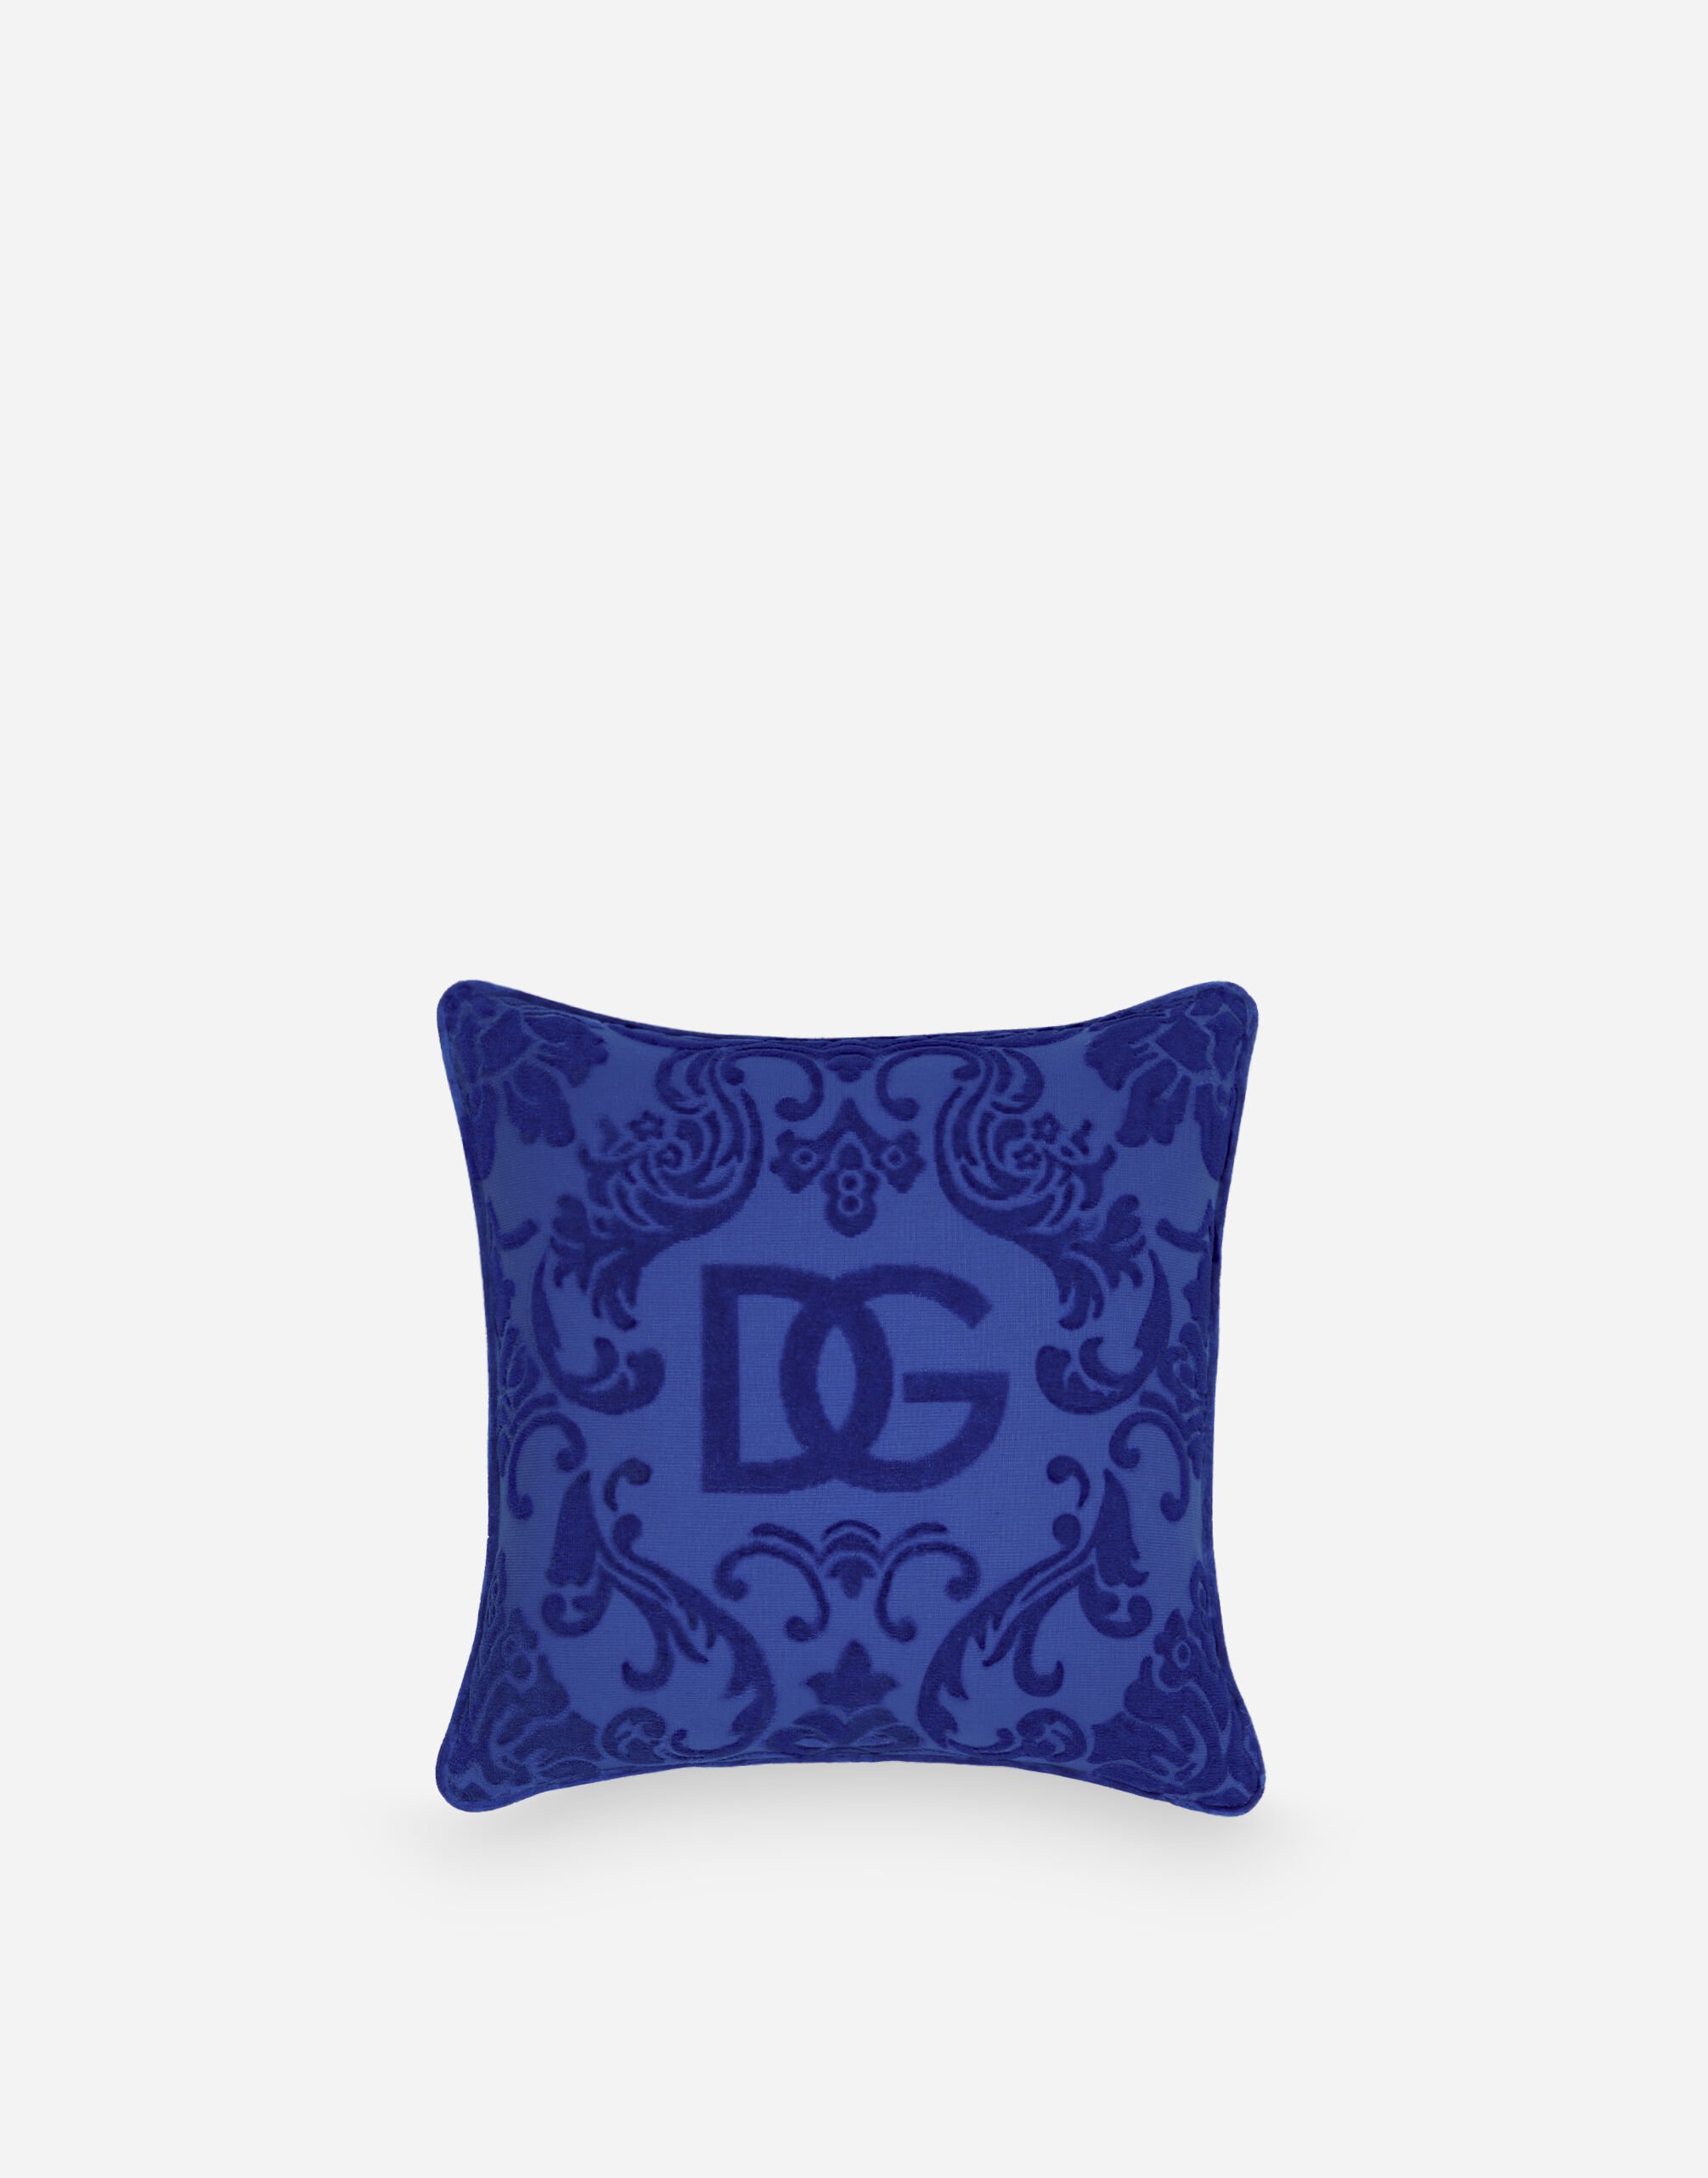 Dolce & Gabbana وسادة من قطن تيري للمساحات الخارجية متعدد الألوان TCE001TCAIY